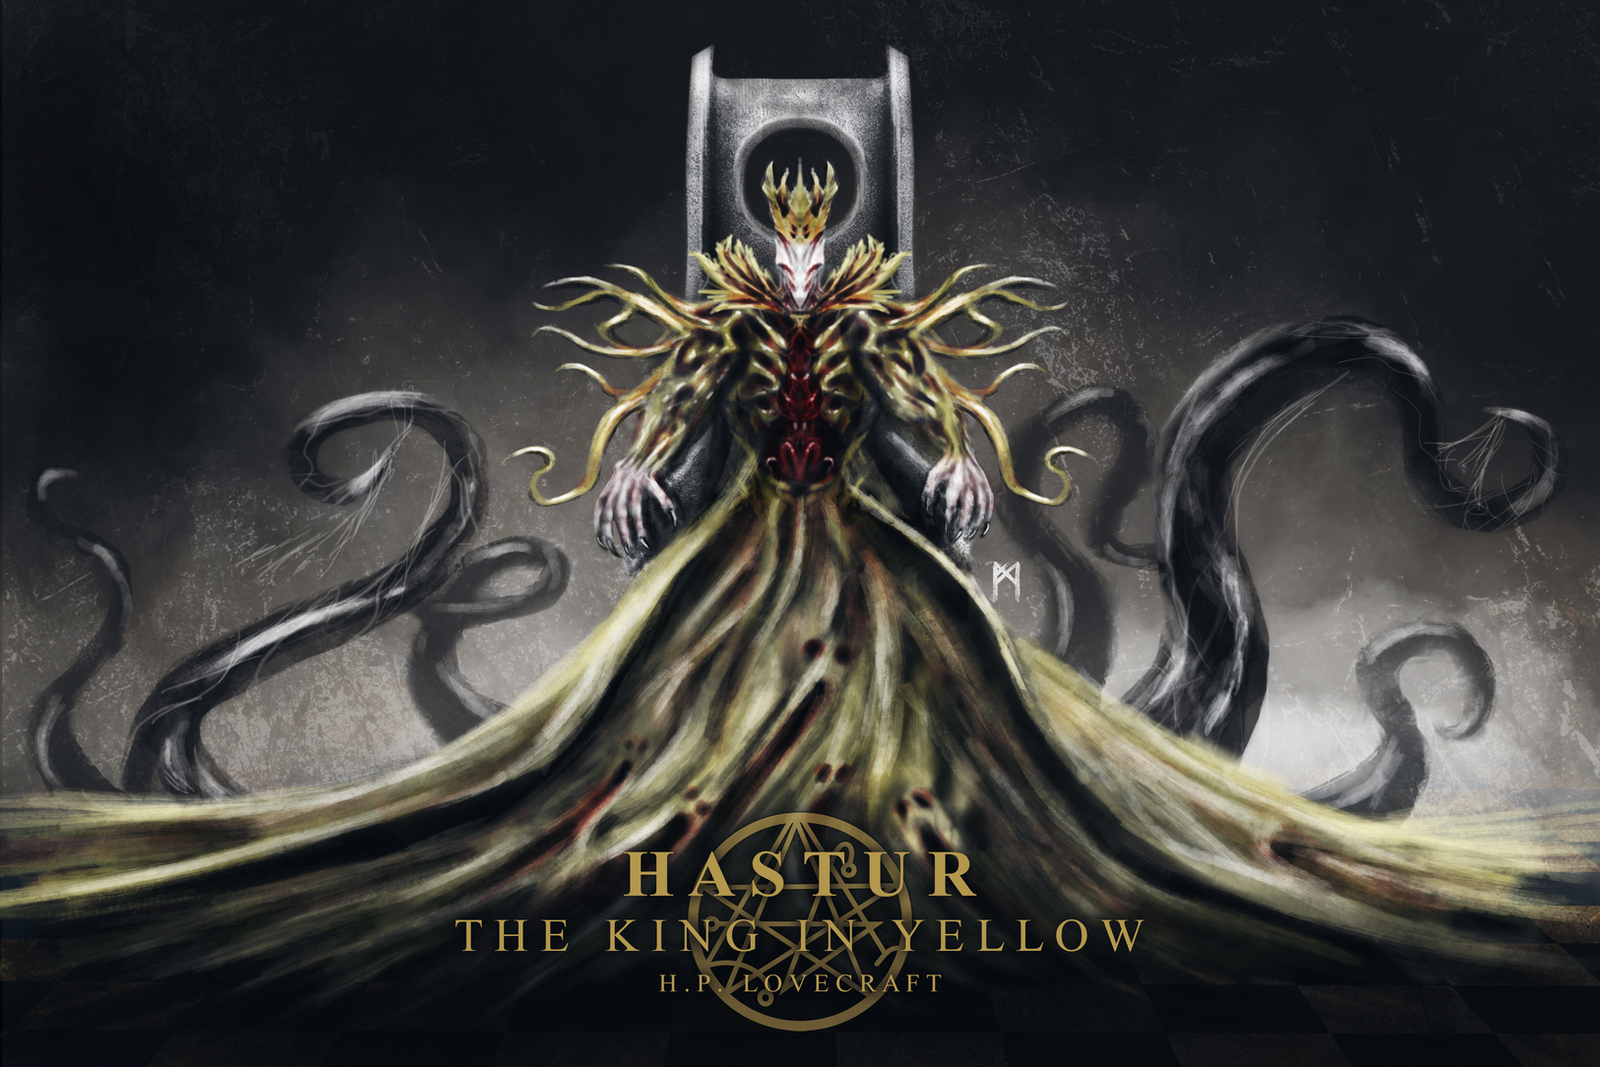 hastur_the_king_in_yellow_by_miguelfirewolf_def2d8u-fullview.jpg